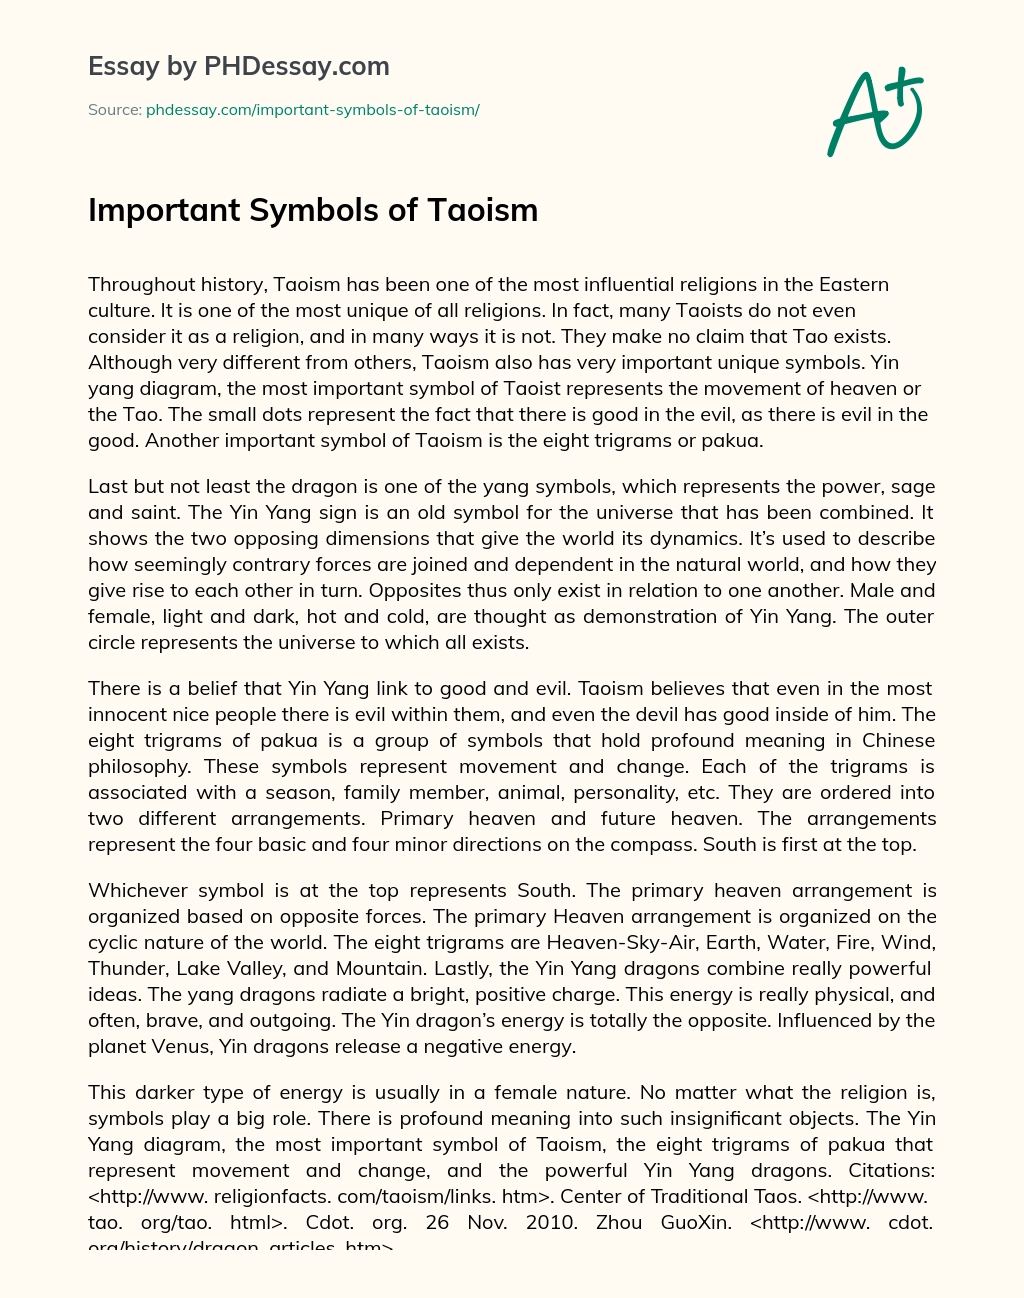 Important Symbols of Taoism essay